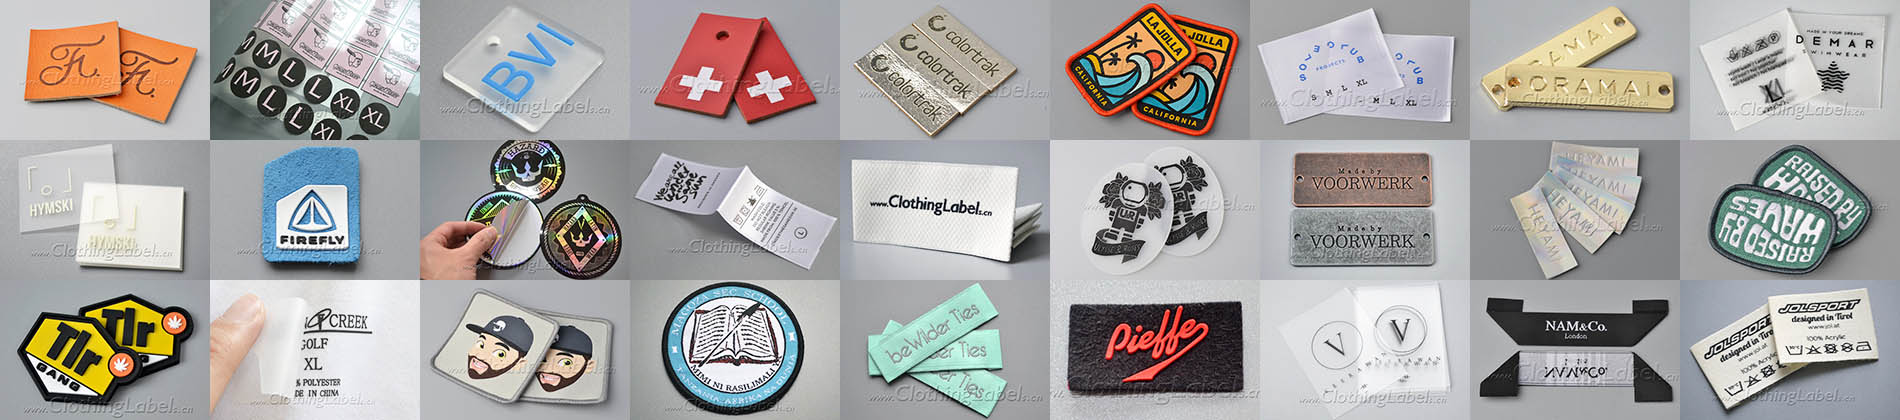 Custom clothing labels samples